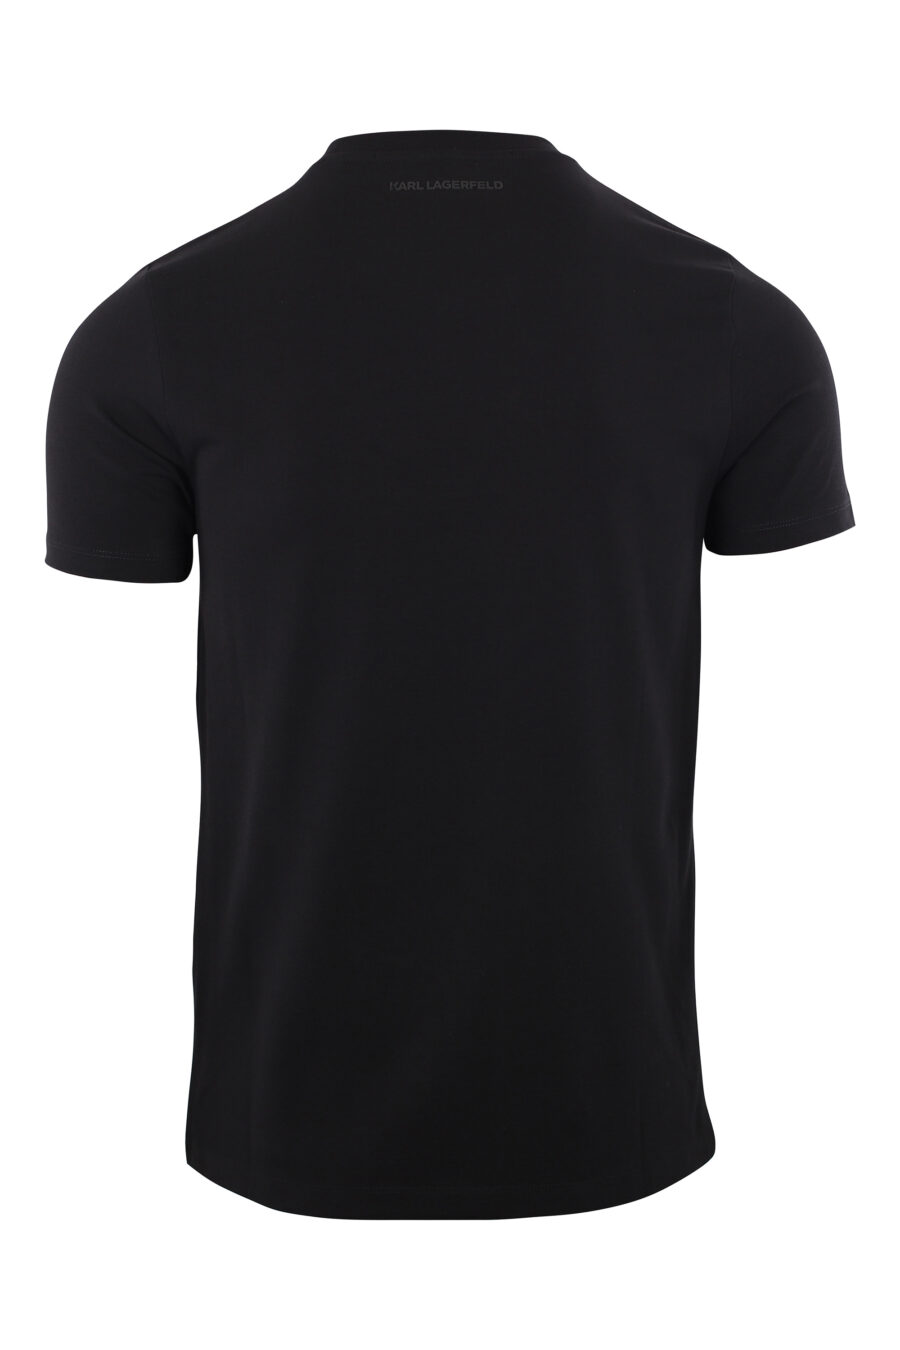 Schwarzes T-Shirt mit Logo in mintgrüner Silhouette - IMG 1995